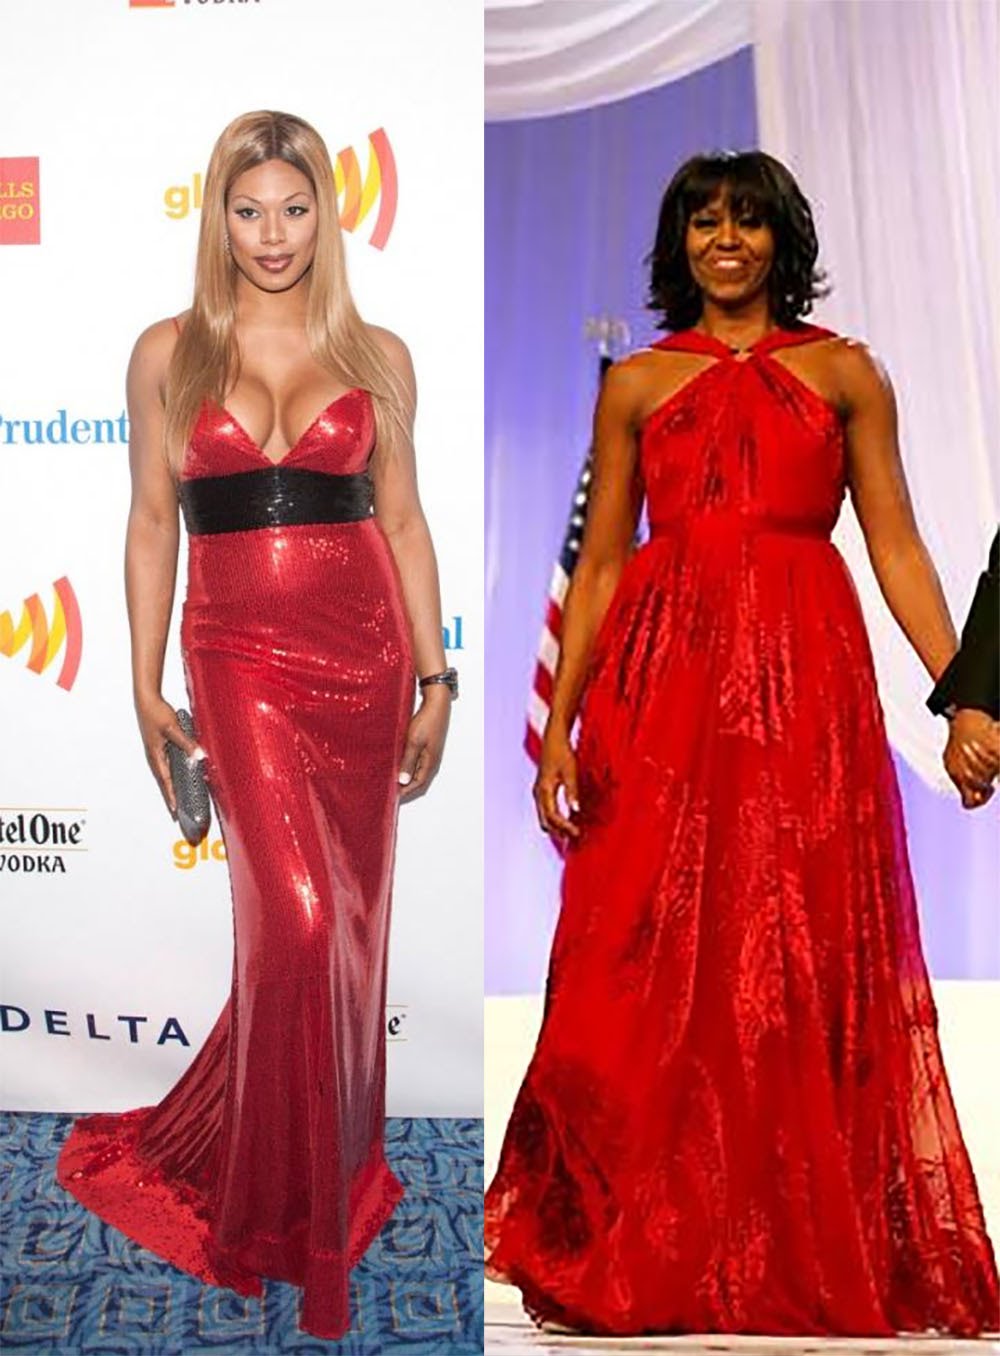 Over 95% Chance Michelle Obama & Jennifer Aniston Born Men: Satanic-Illuminati Connection